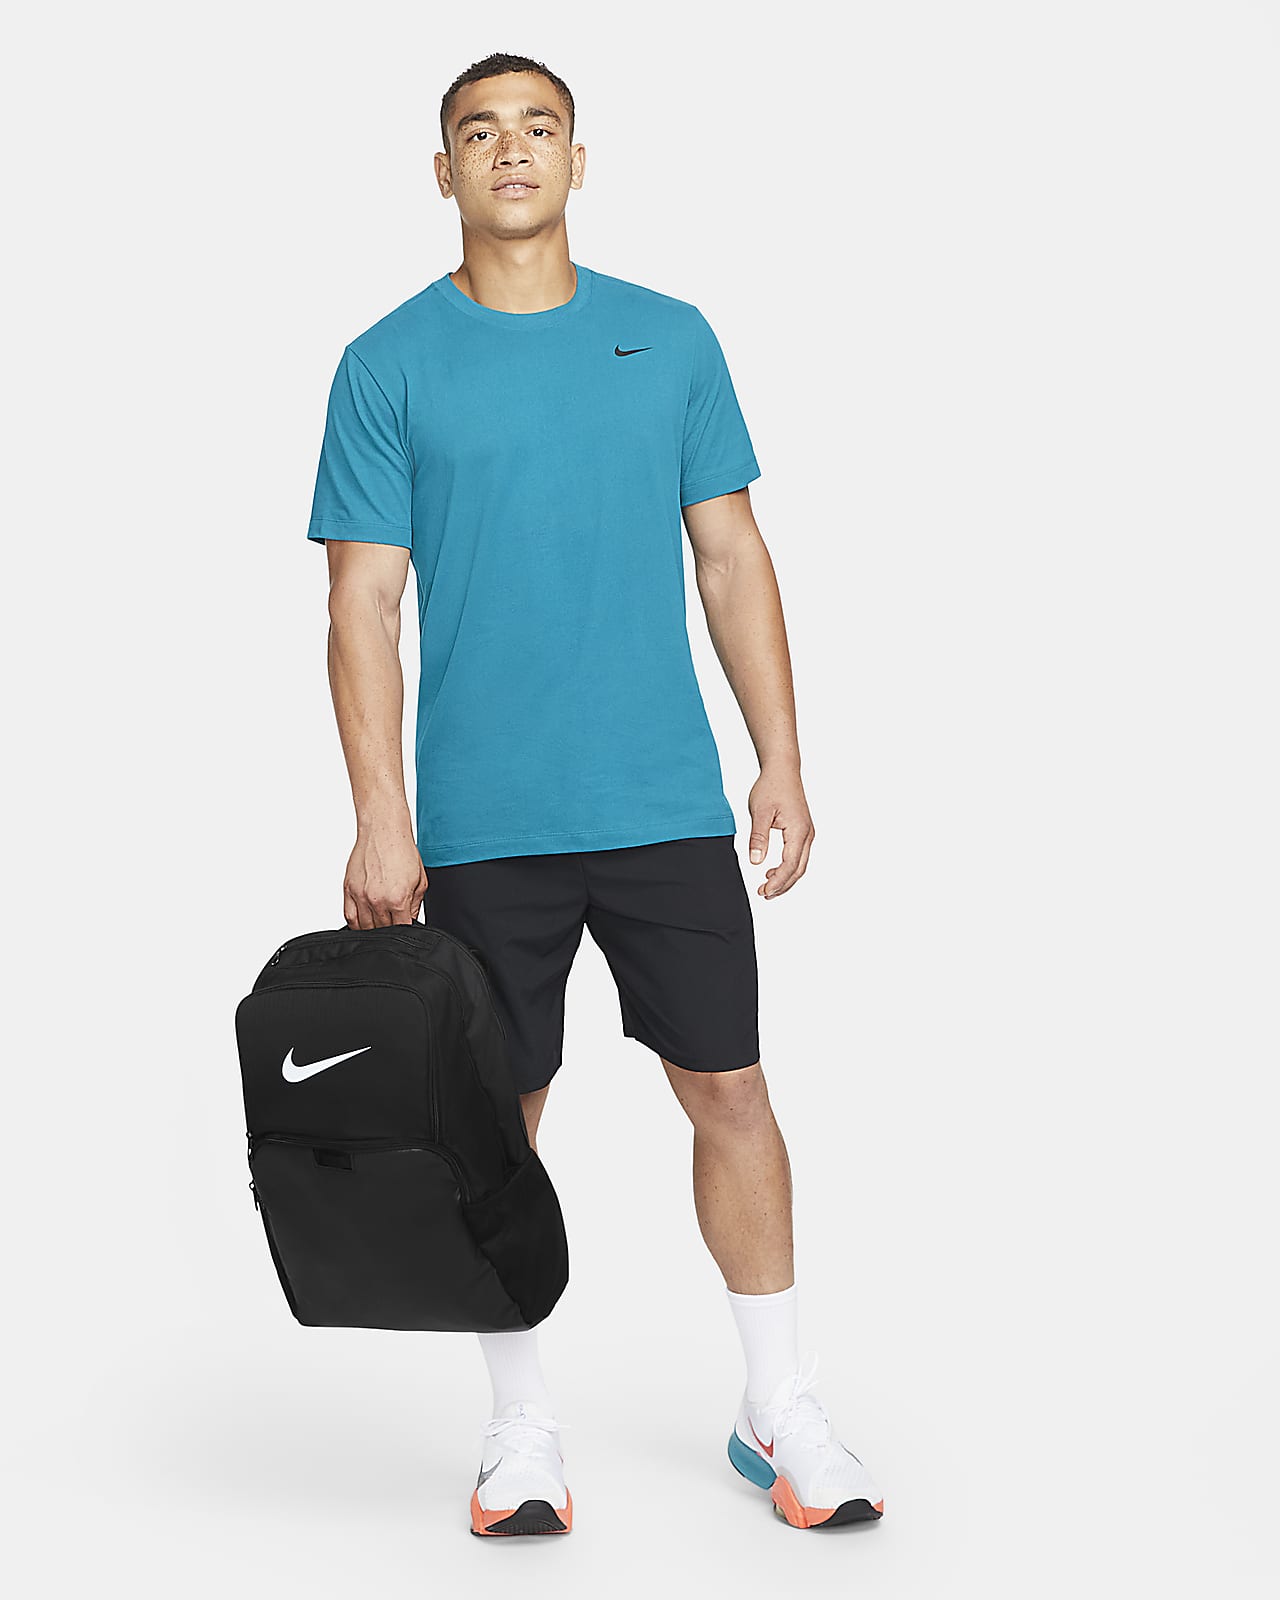 IetpShops Maldives - Nike Brasilia Winterized Training Backpack